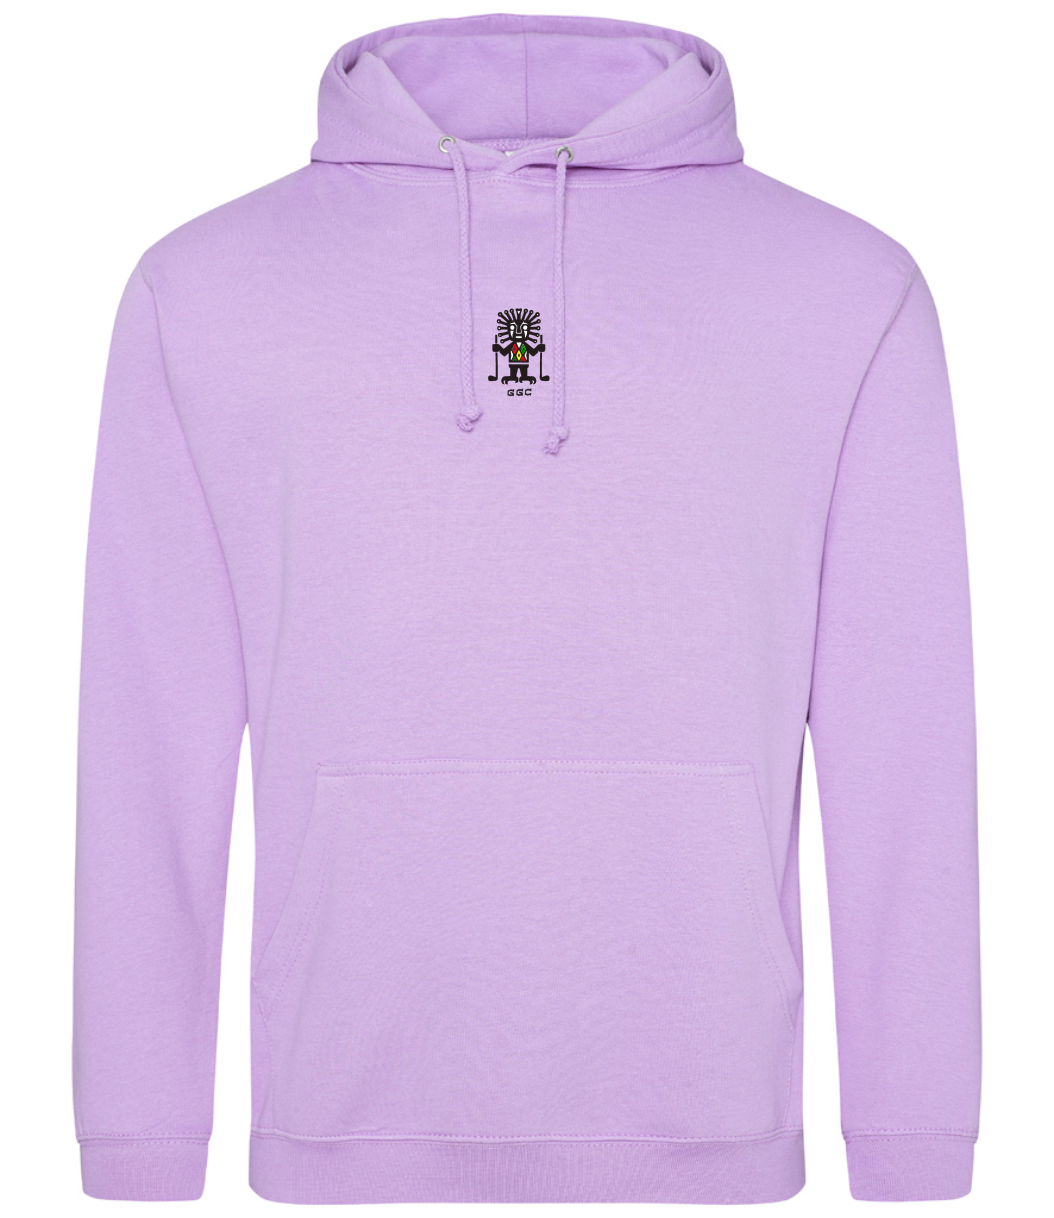 Golf god clothing lavender hoodie front 